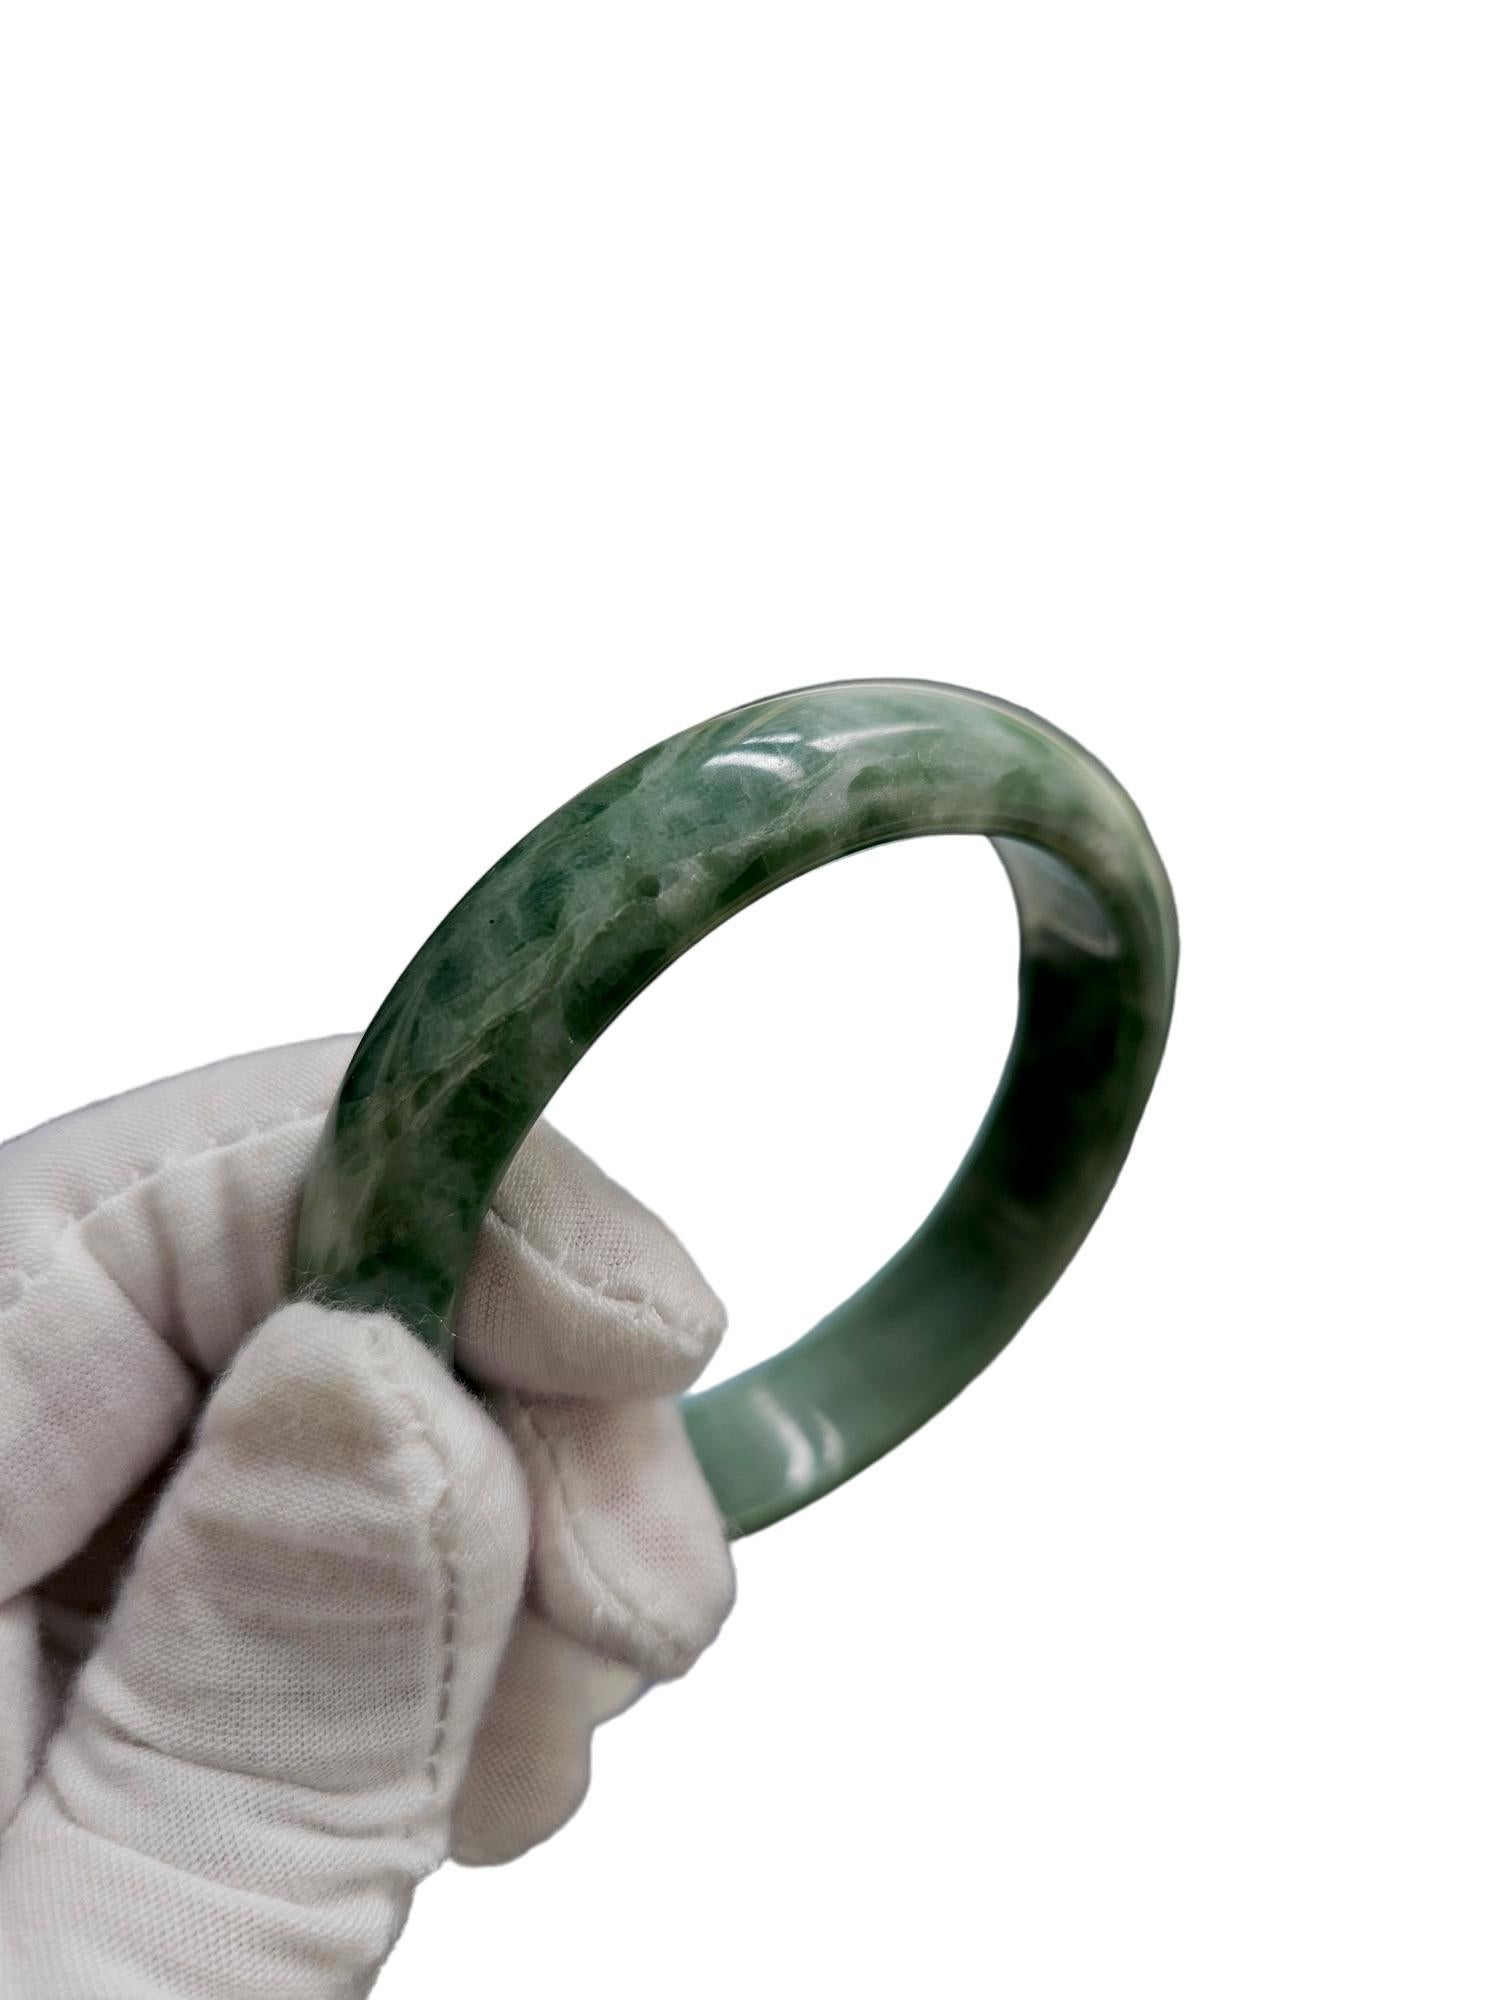 Earth's Burmese A-Jade Bangle Bracelet (MADE IN JAPAN) Green Jadeite 08808 For Sale 3